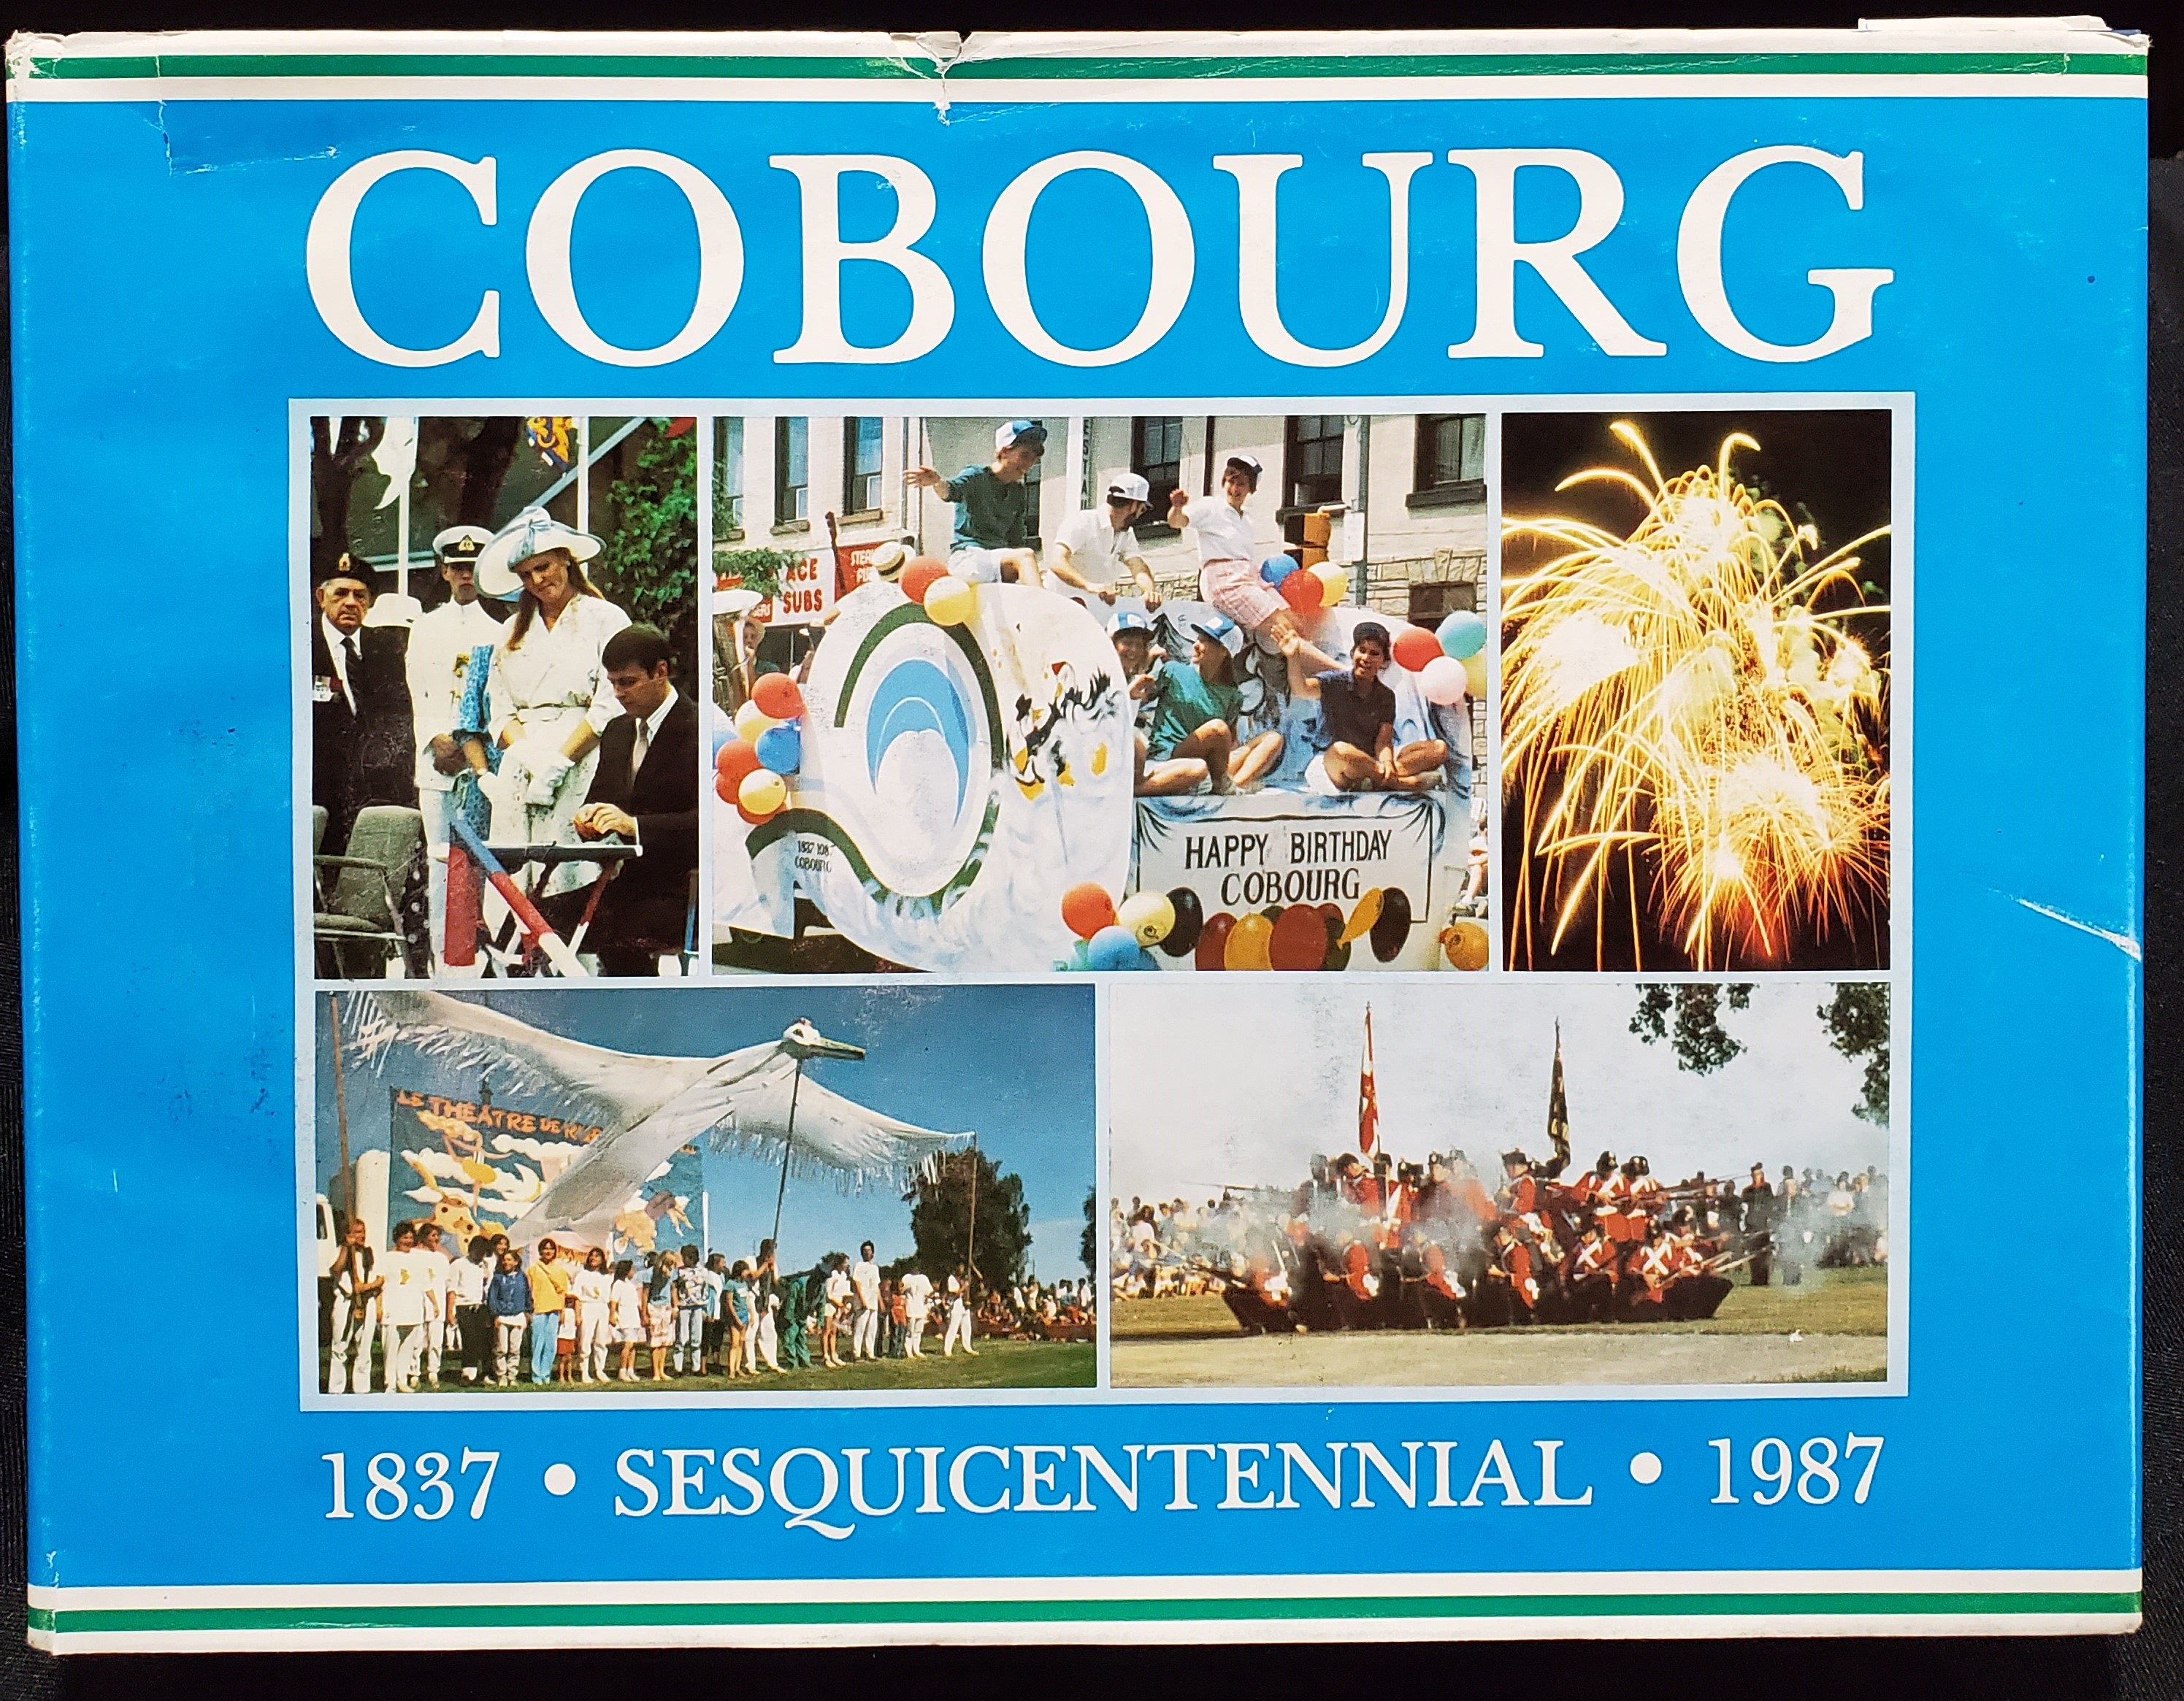 Cobourg Sesquicentennial 1987